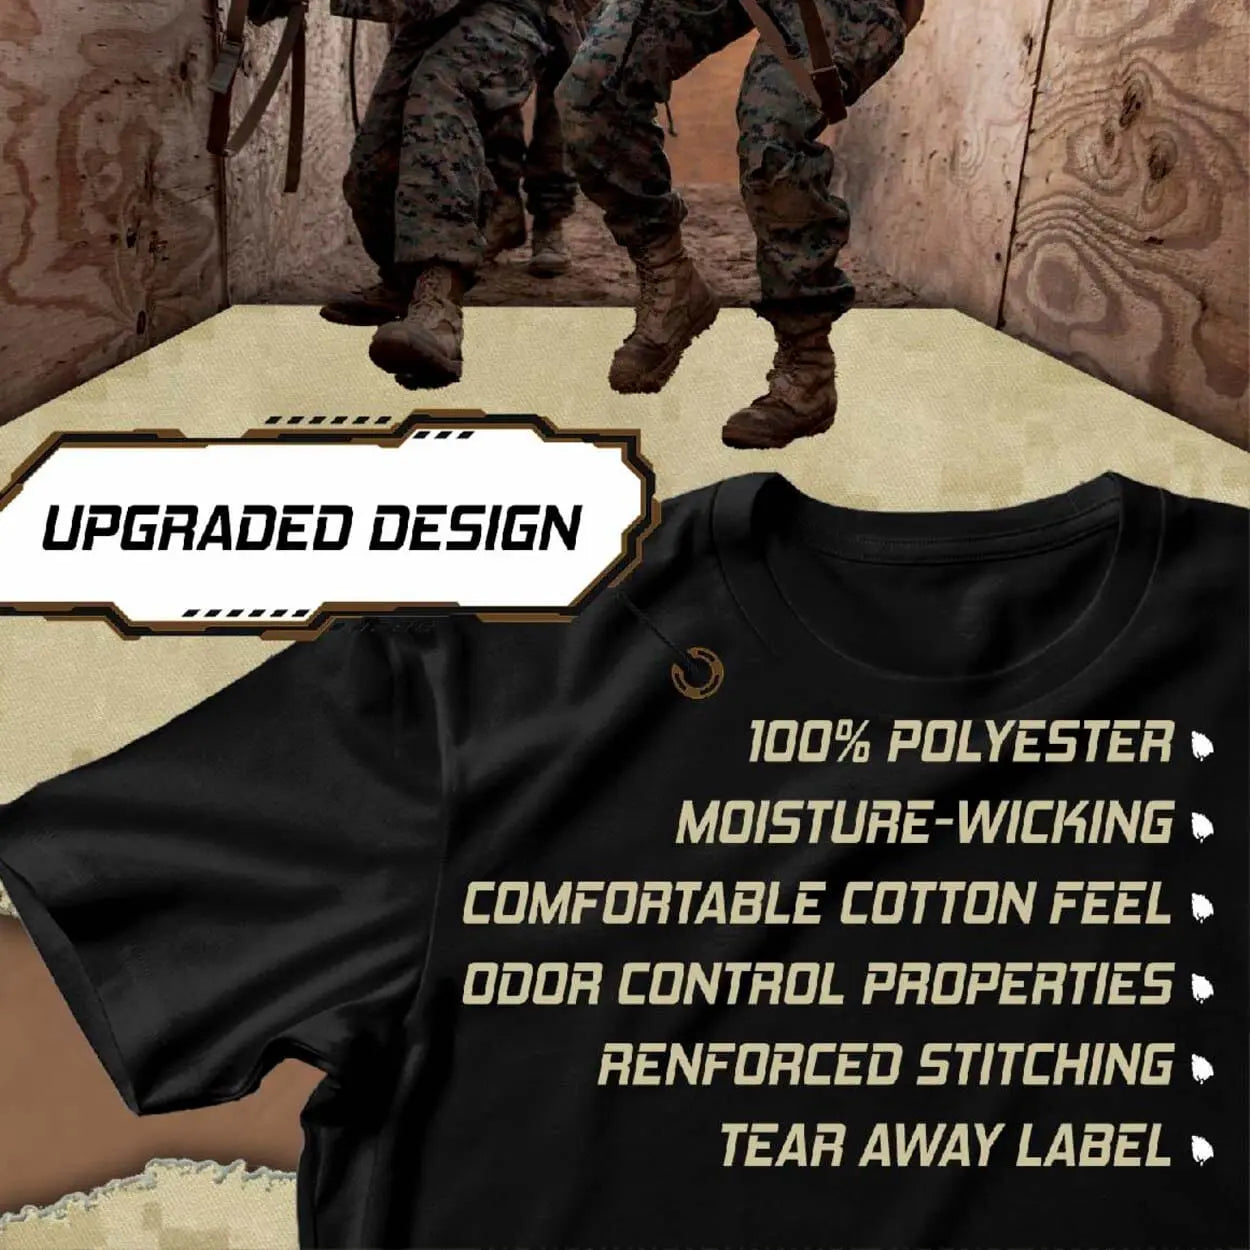 Marine Shirts - Shop Performance Long Sleeves | Marine Corps Direct